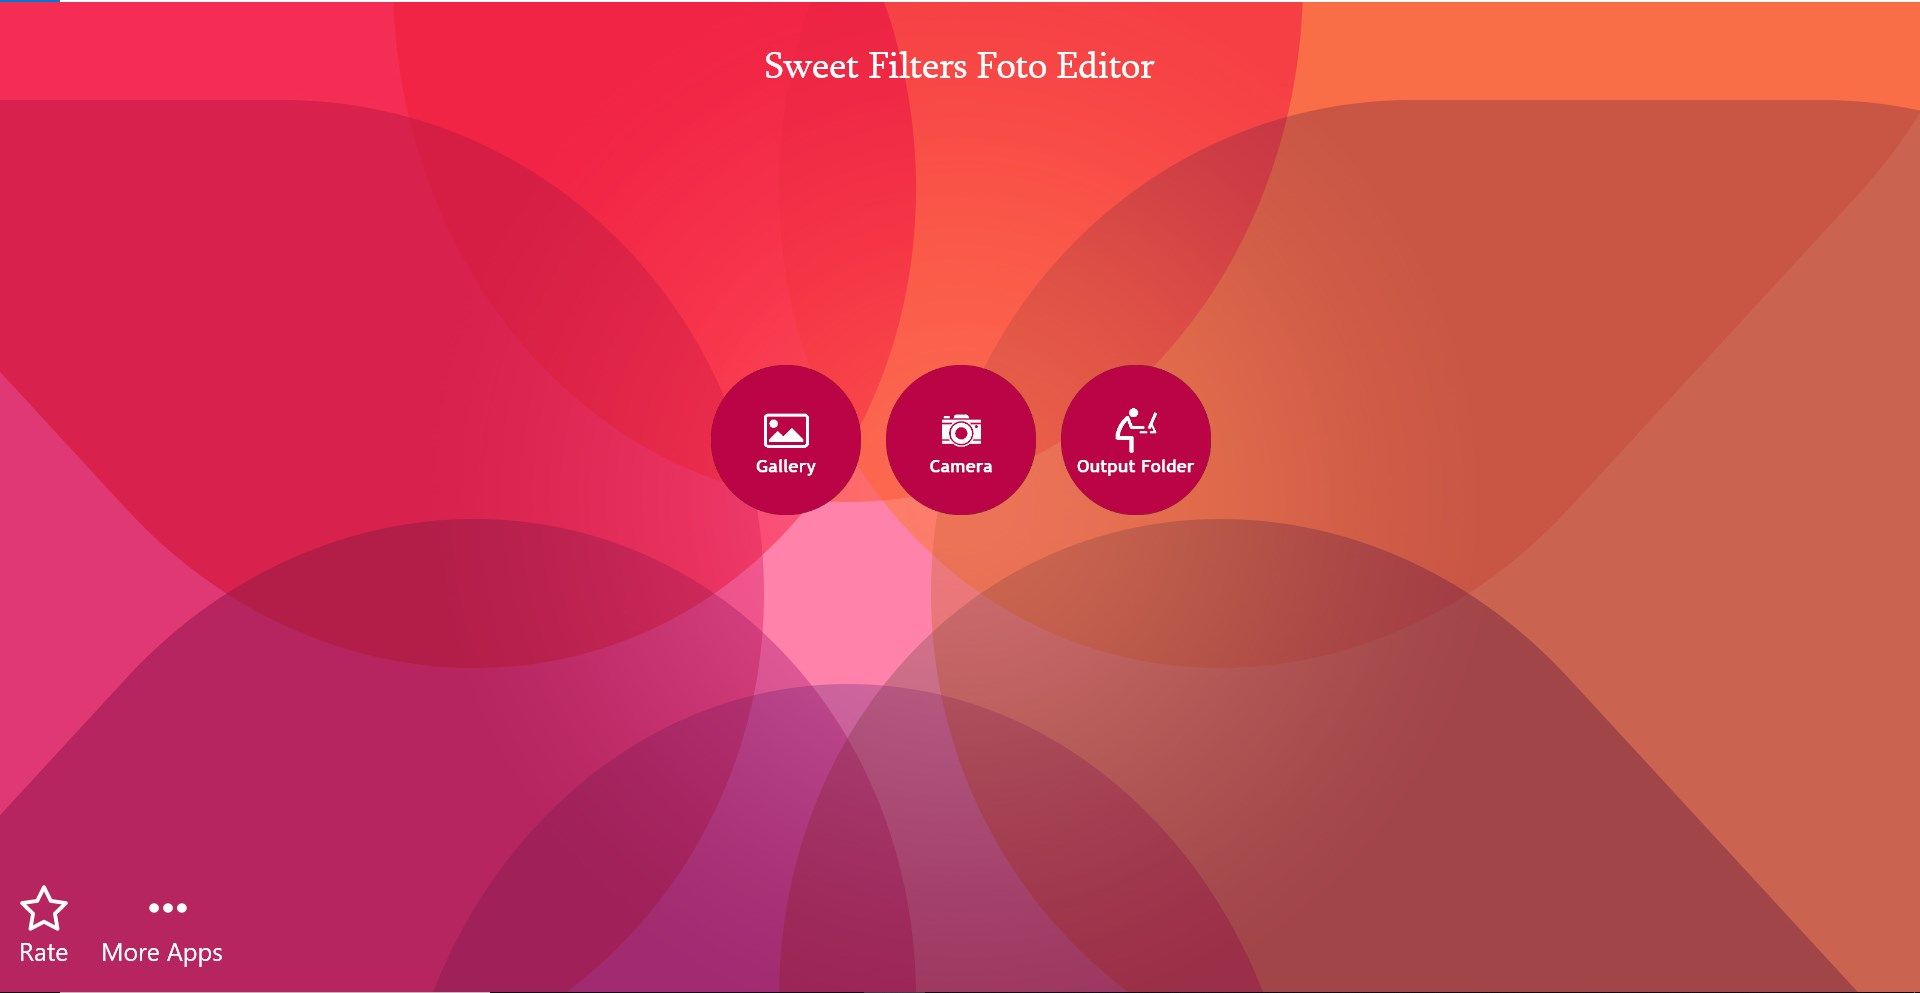 Sweet Filters Foto Editor